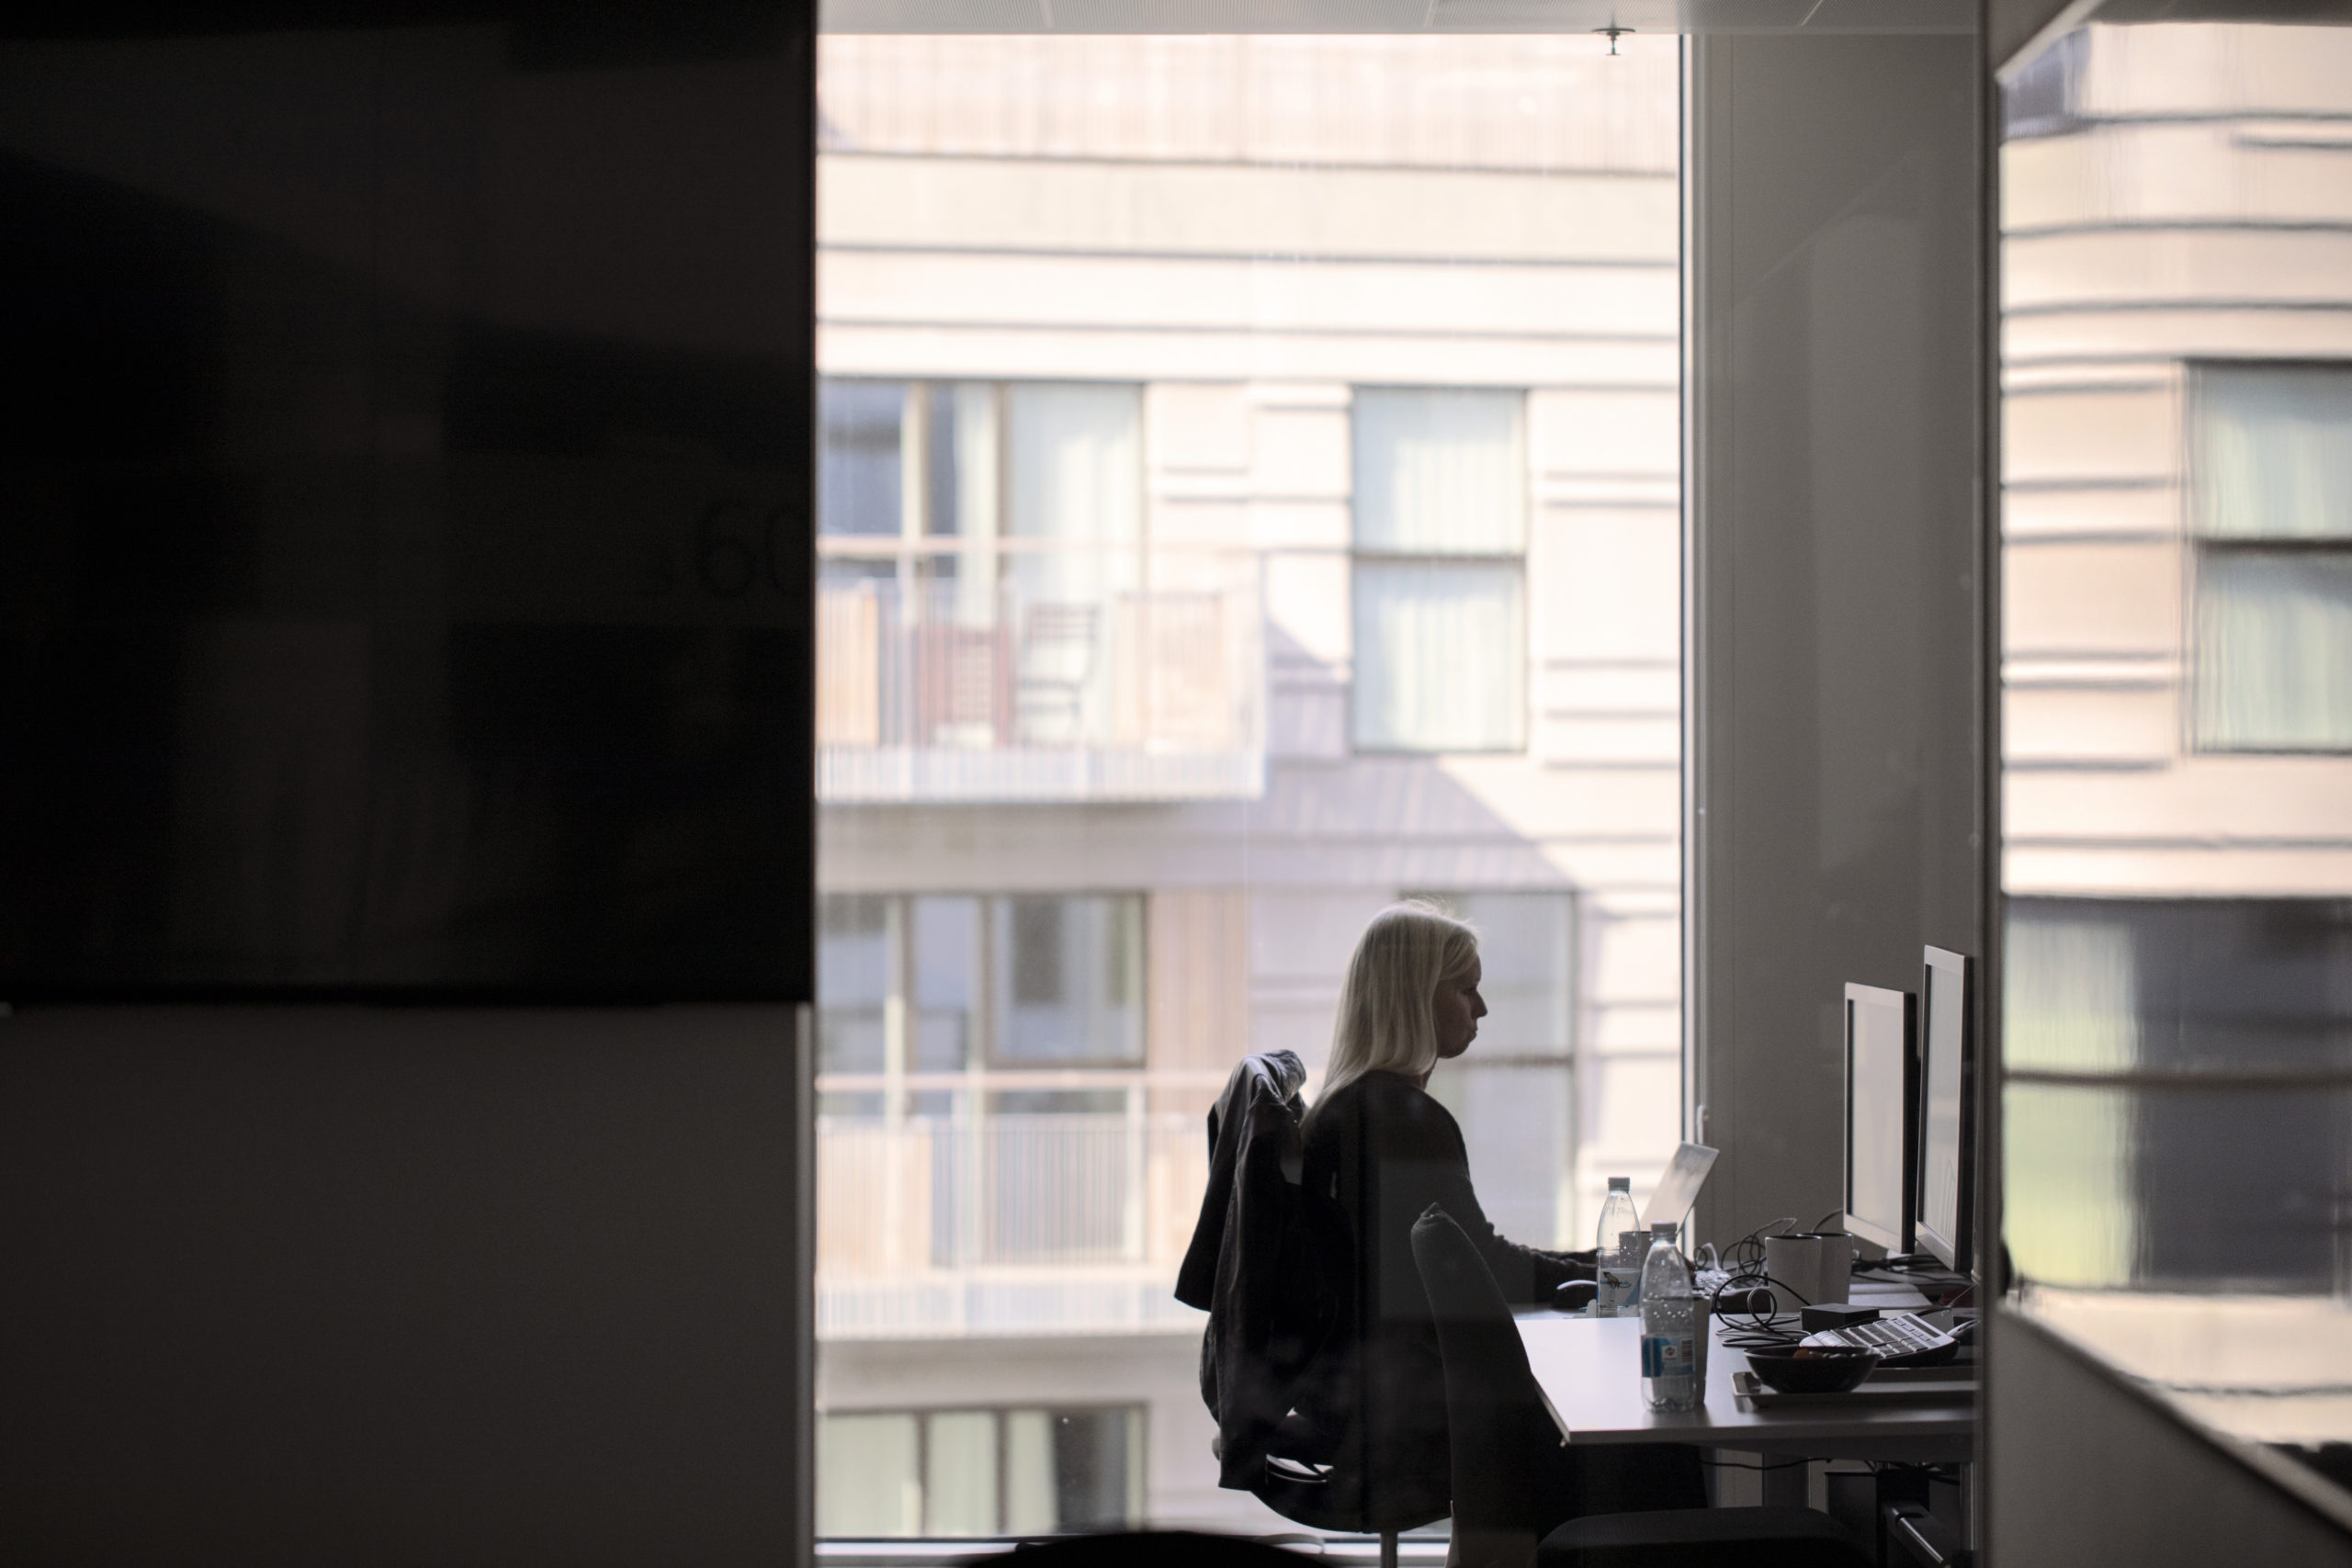 A Microsoft Denmark employee works at an office desk.